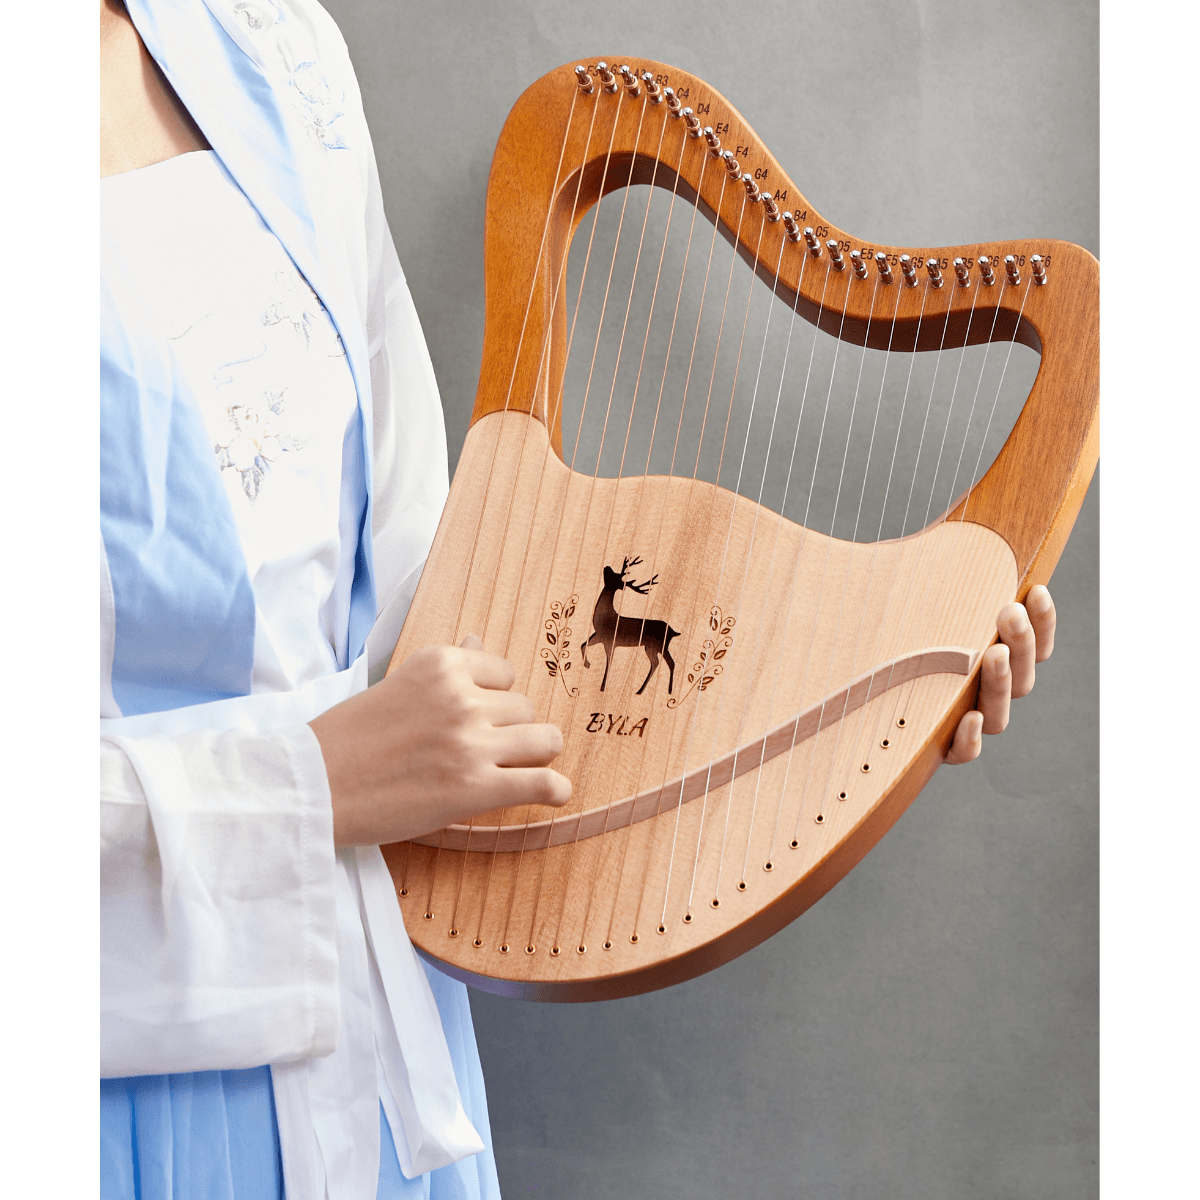 Lyre Harp 21 String BYLA Deer Mahogany mini harp musical instrument